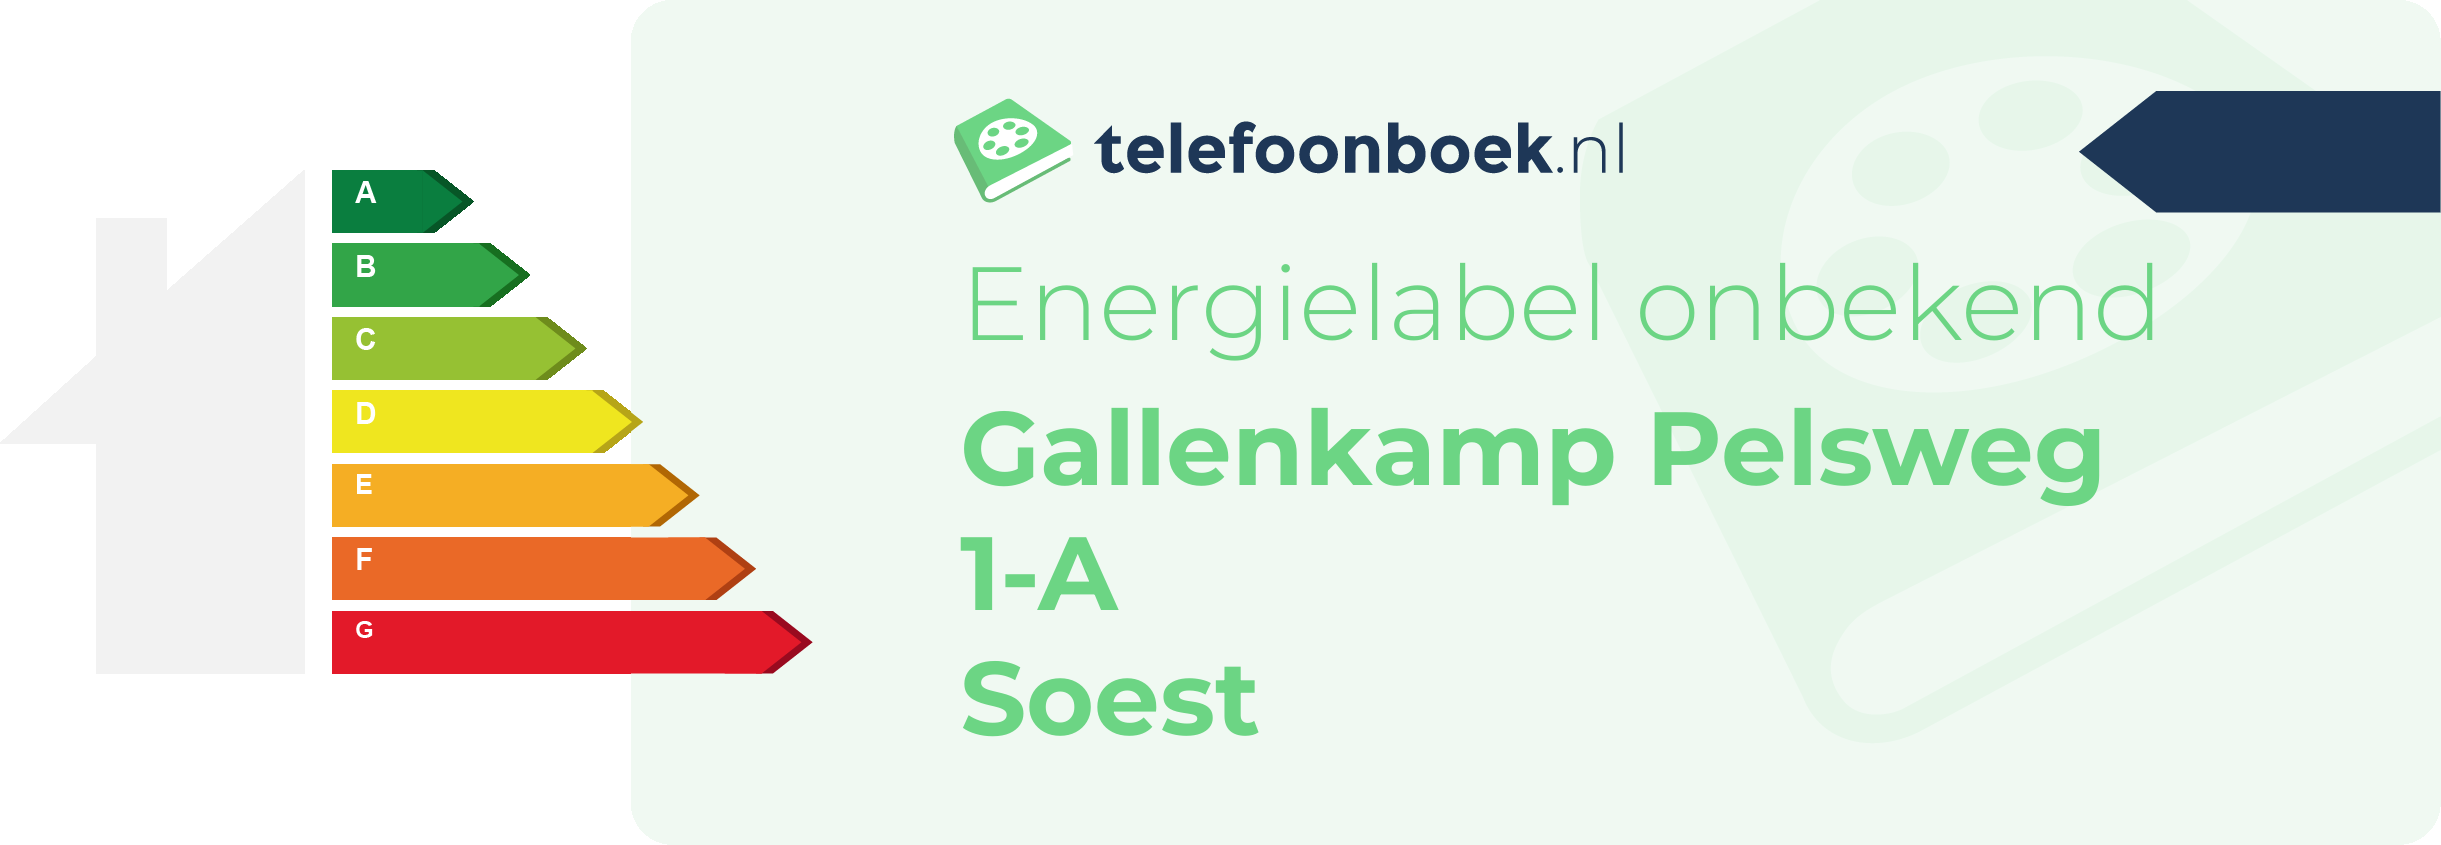 Energielabel Gallenkamp Pelsweg 1-A Soest